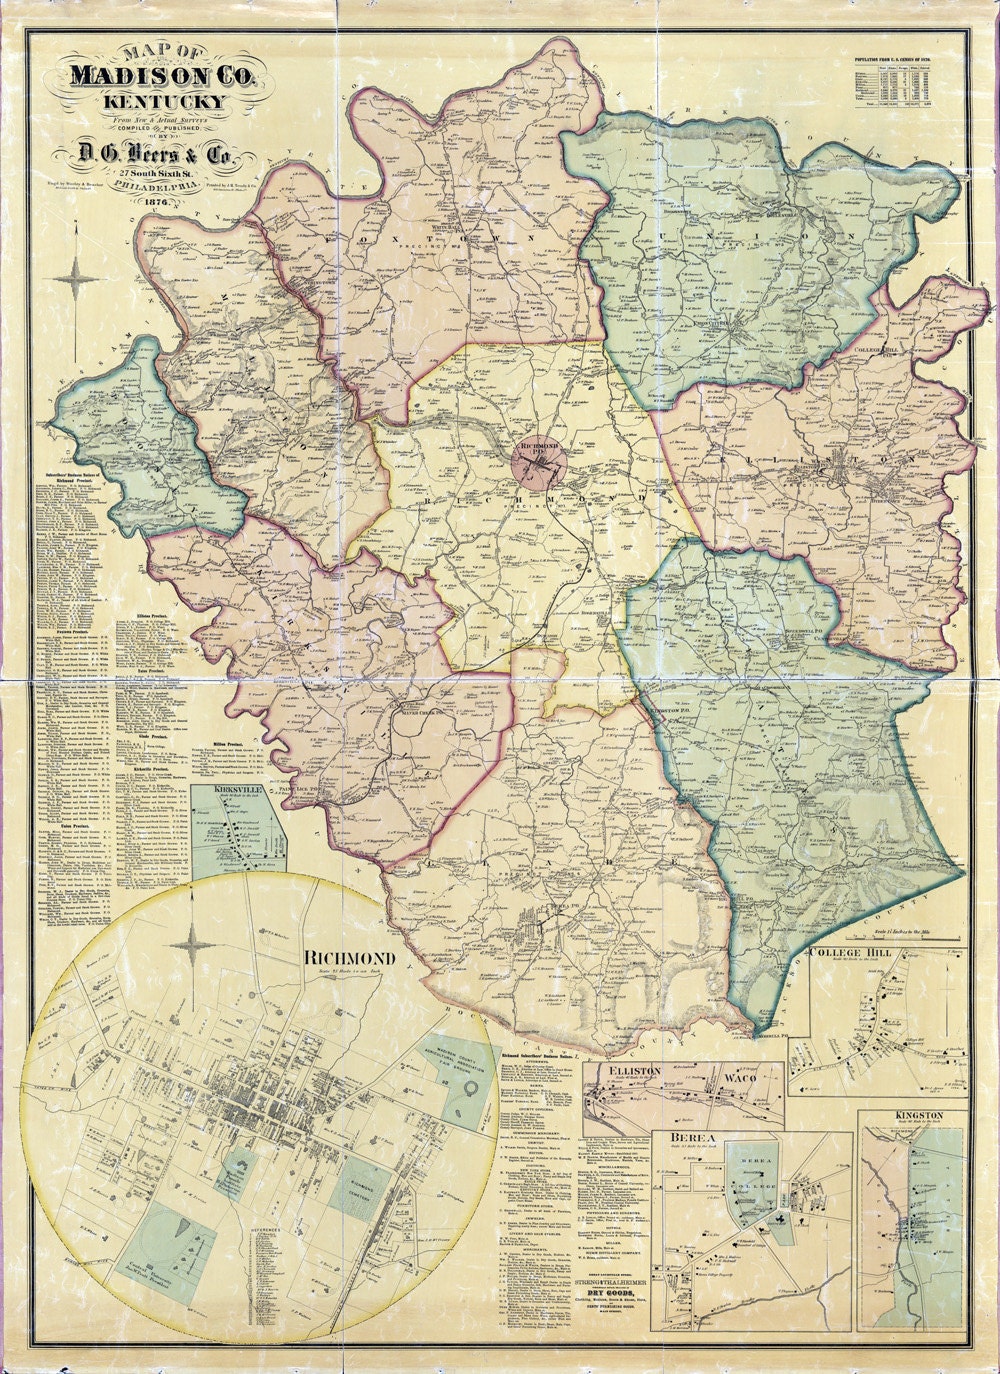 1876 Map of Madison County Kentucky by GenealogicalSurveyor